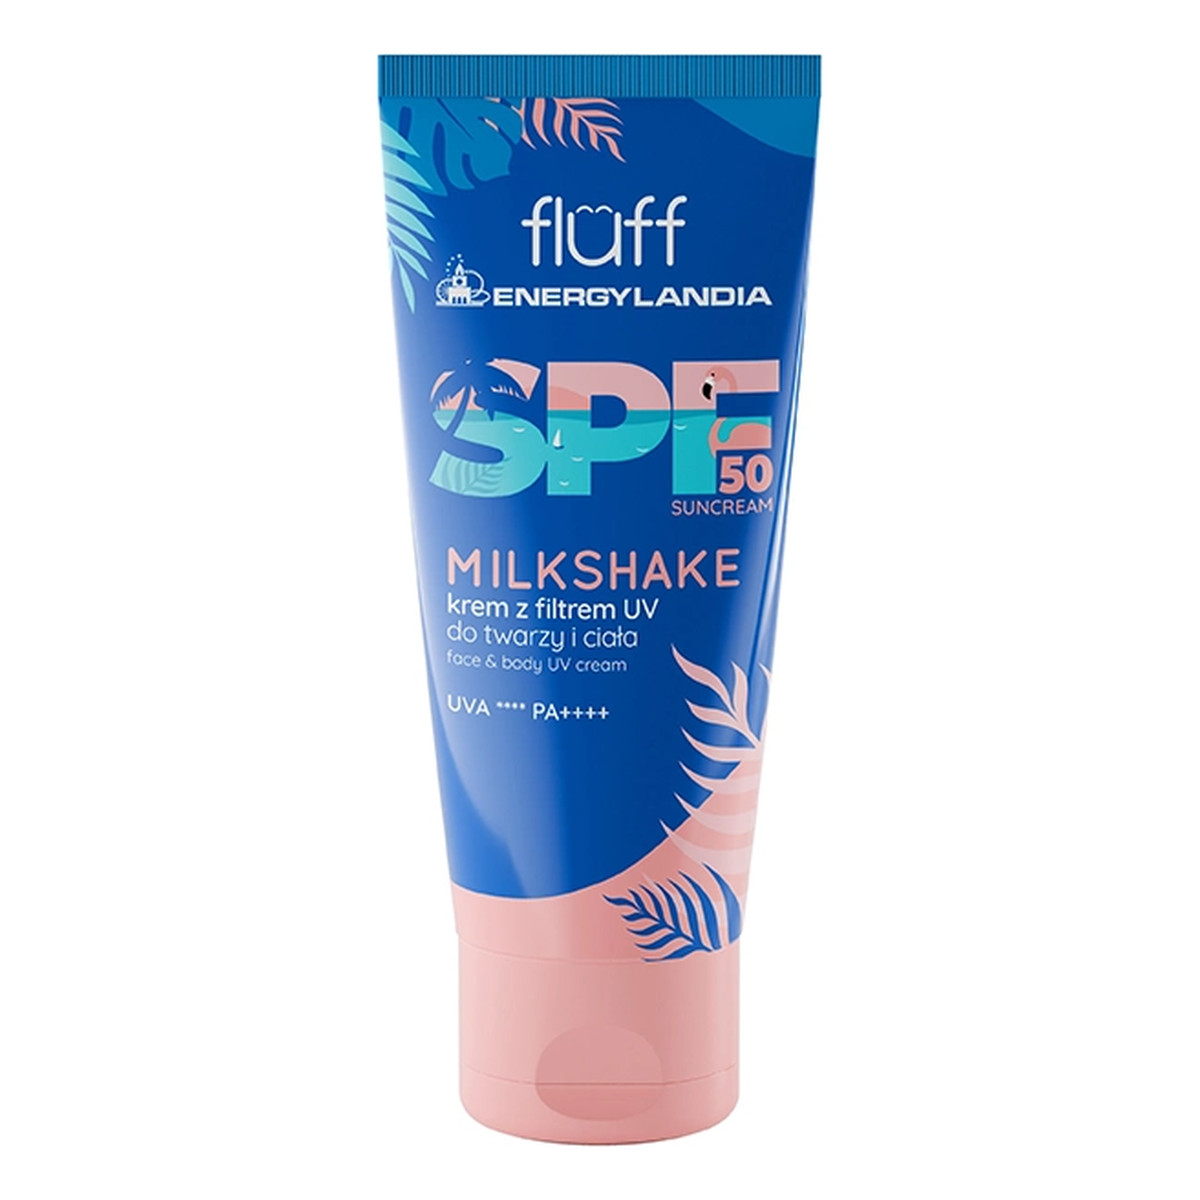 Fluff MILKSHAKE - Krem z filtrem SPF 50 do twarzy i ciała 100ml